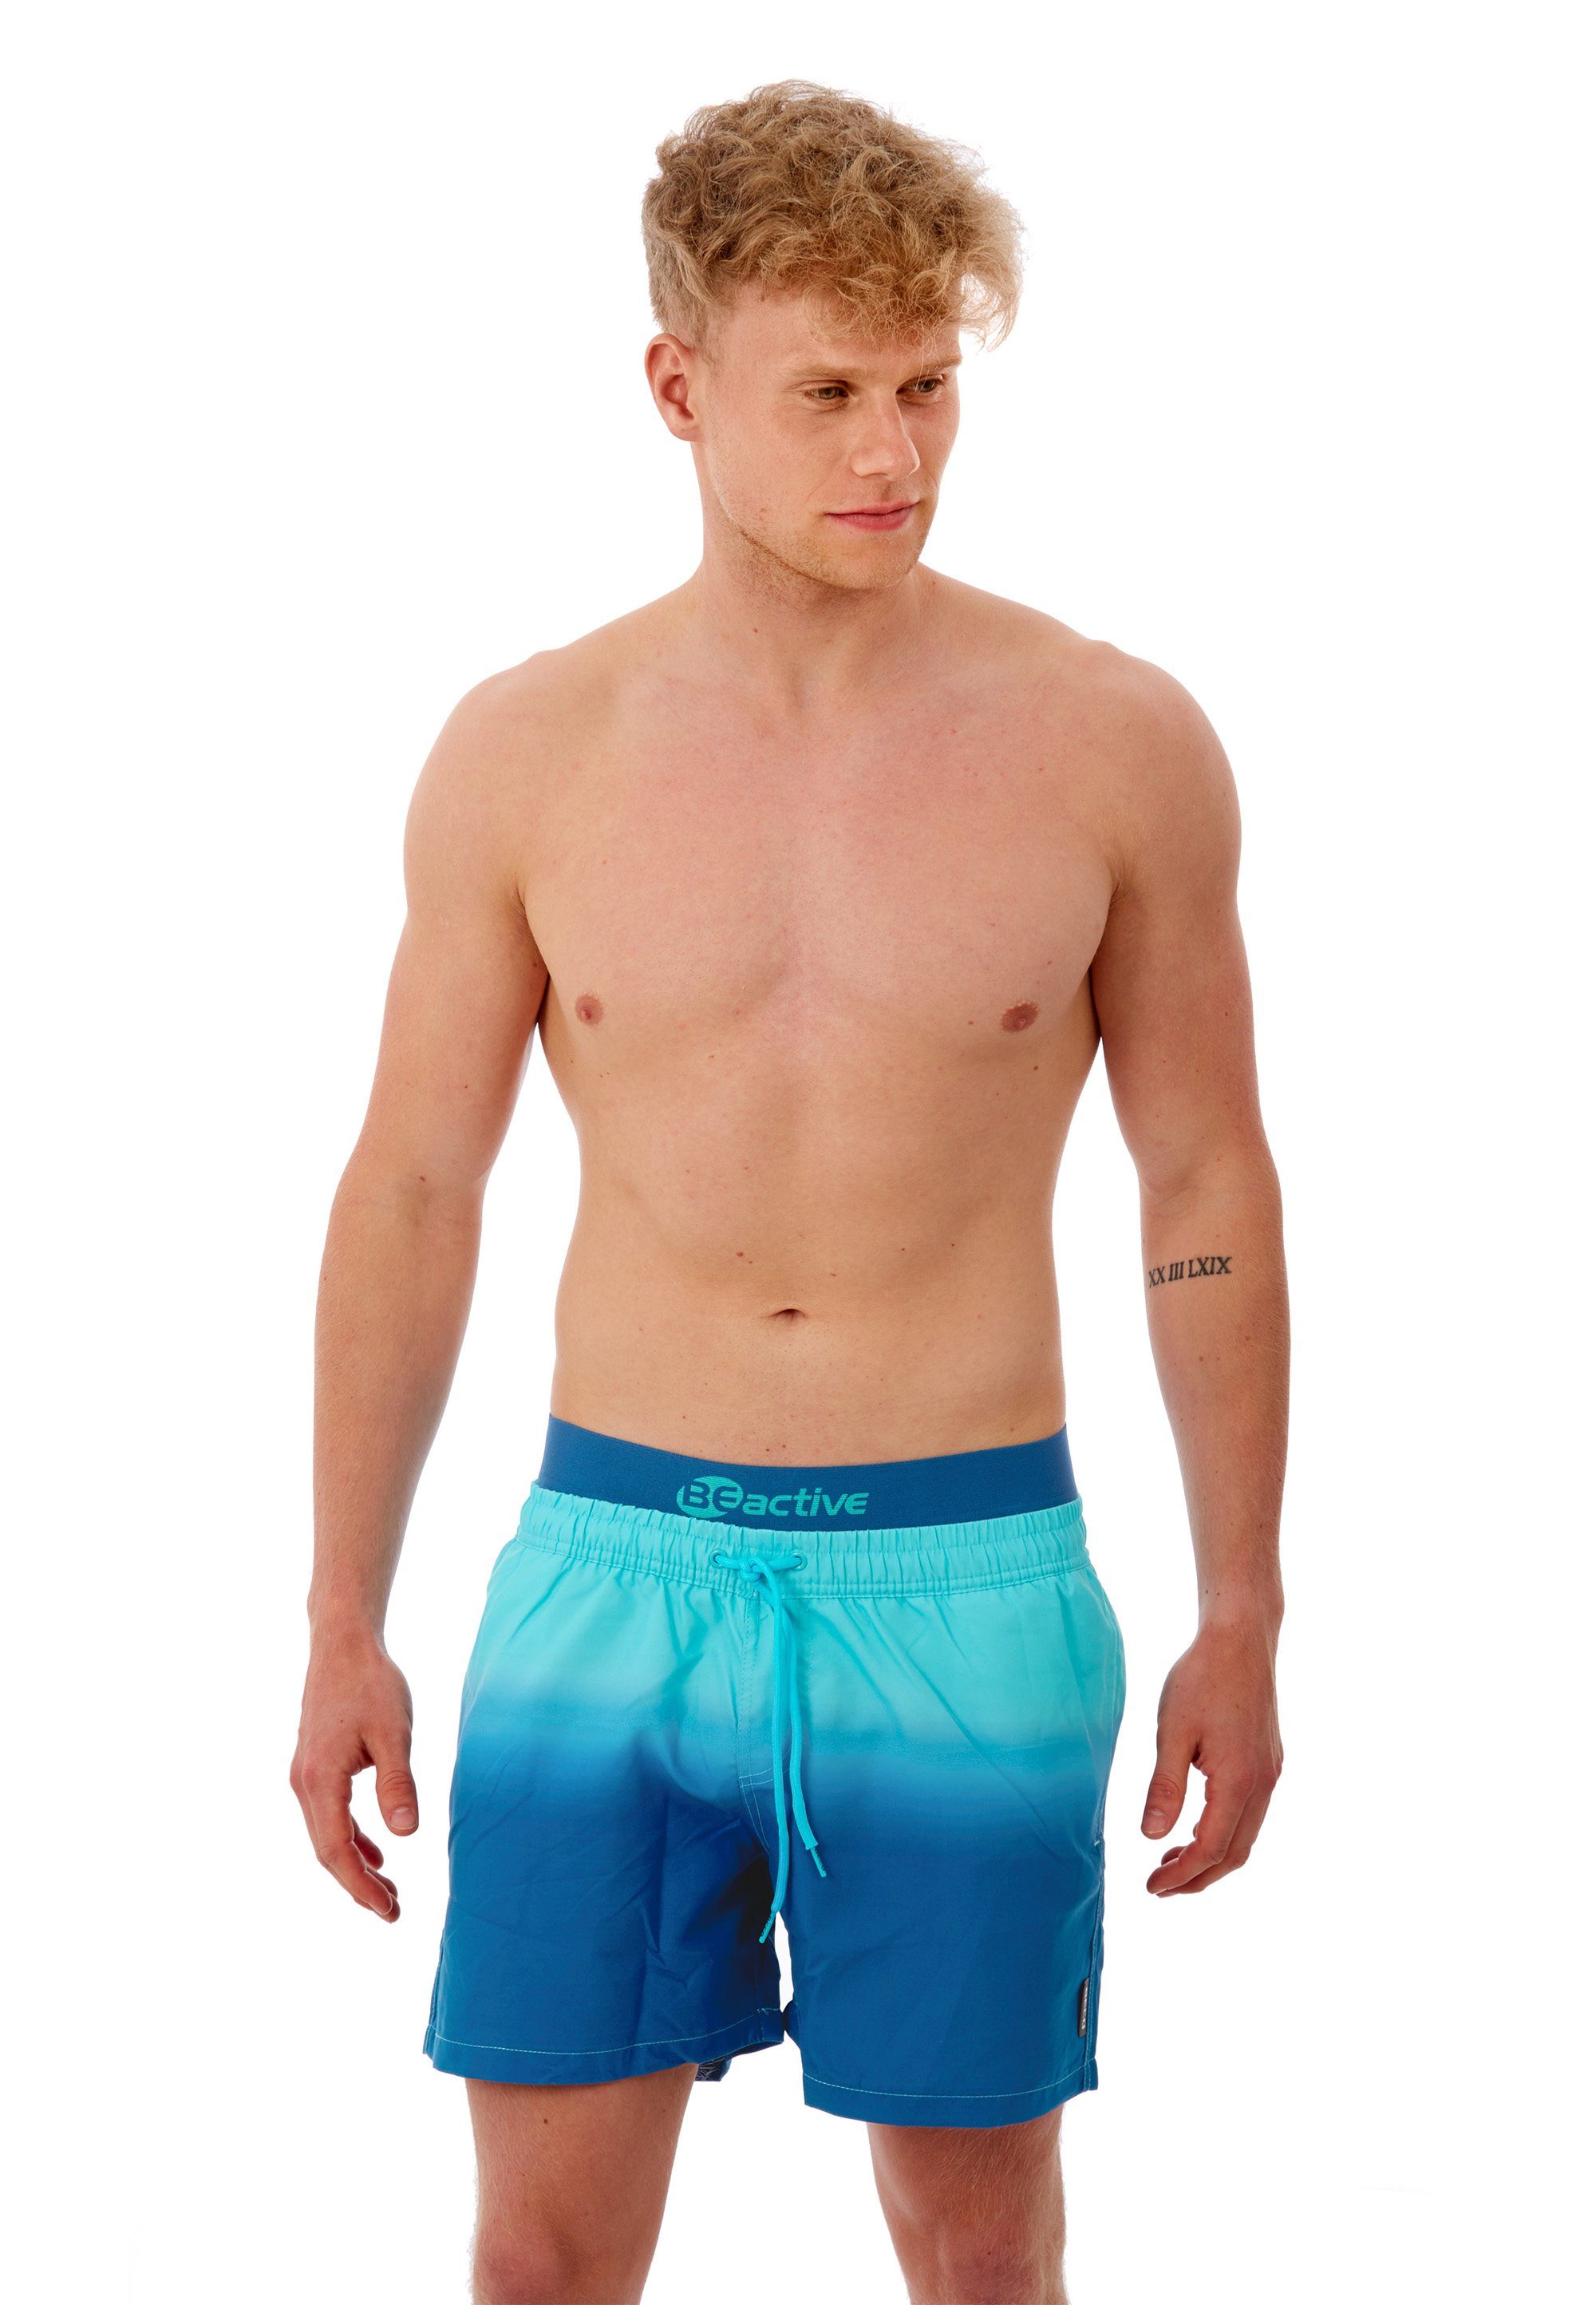 (1-St) Shorts coolem mit Swim BEactive Beermann Farbverlauf Badehose Beco dunkelblau hellblau,